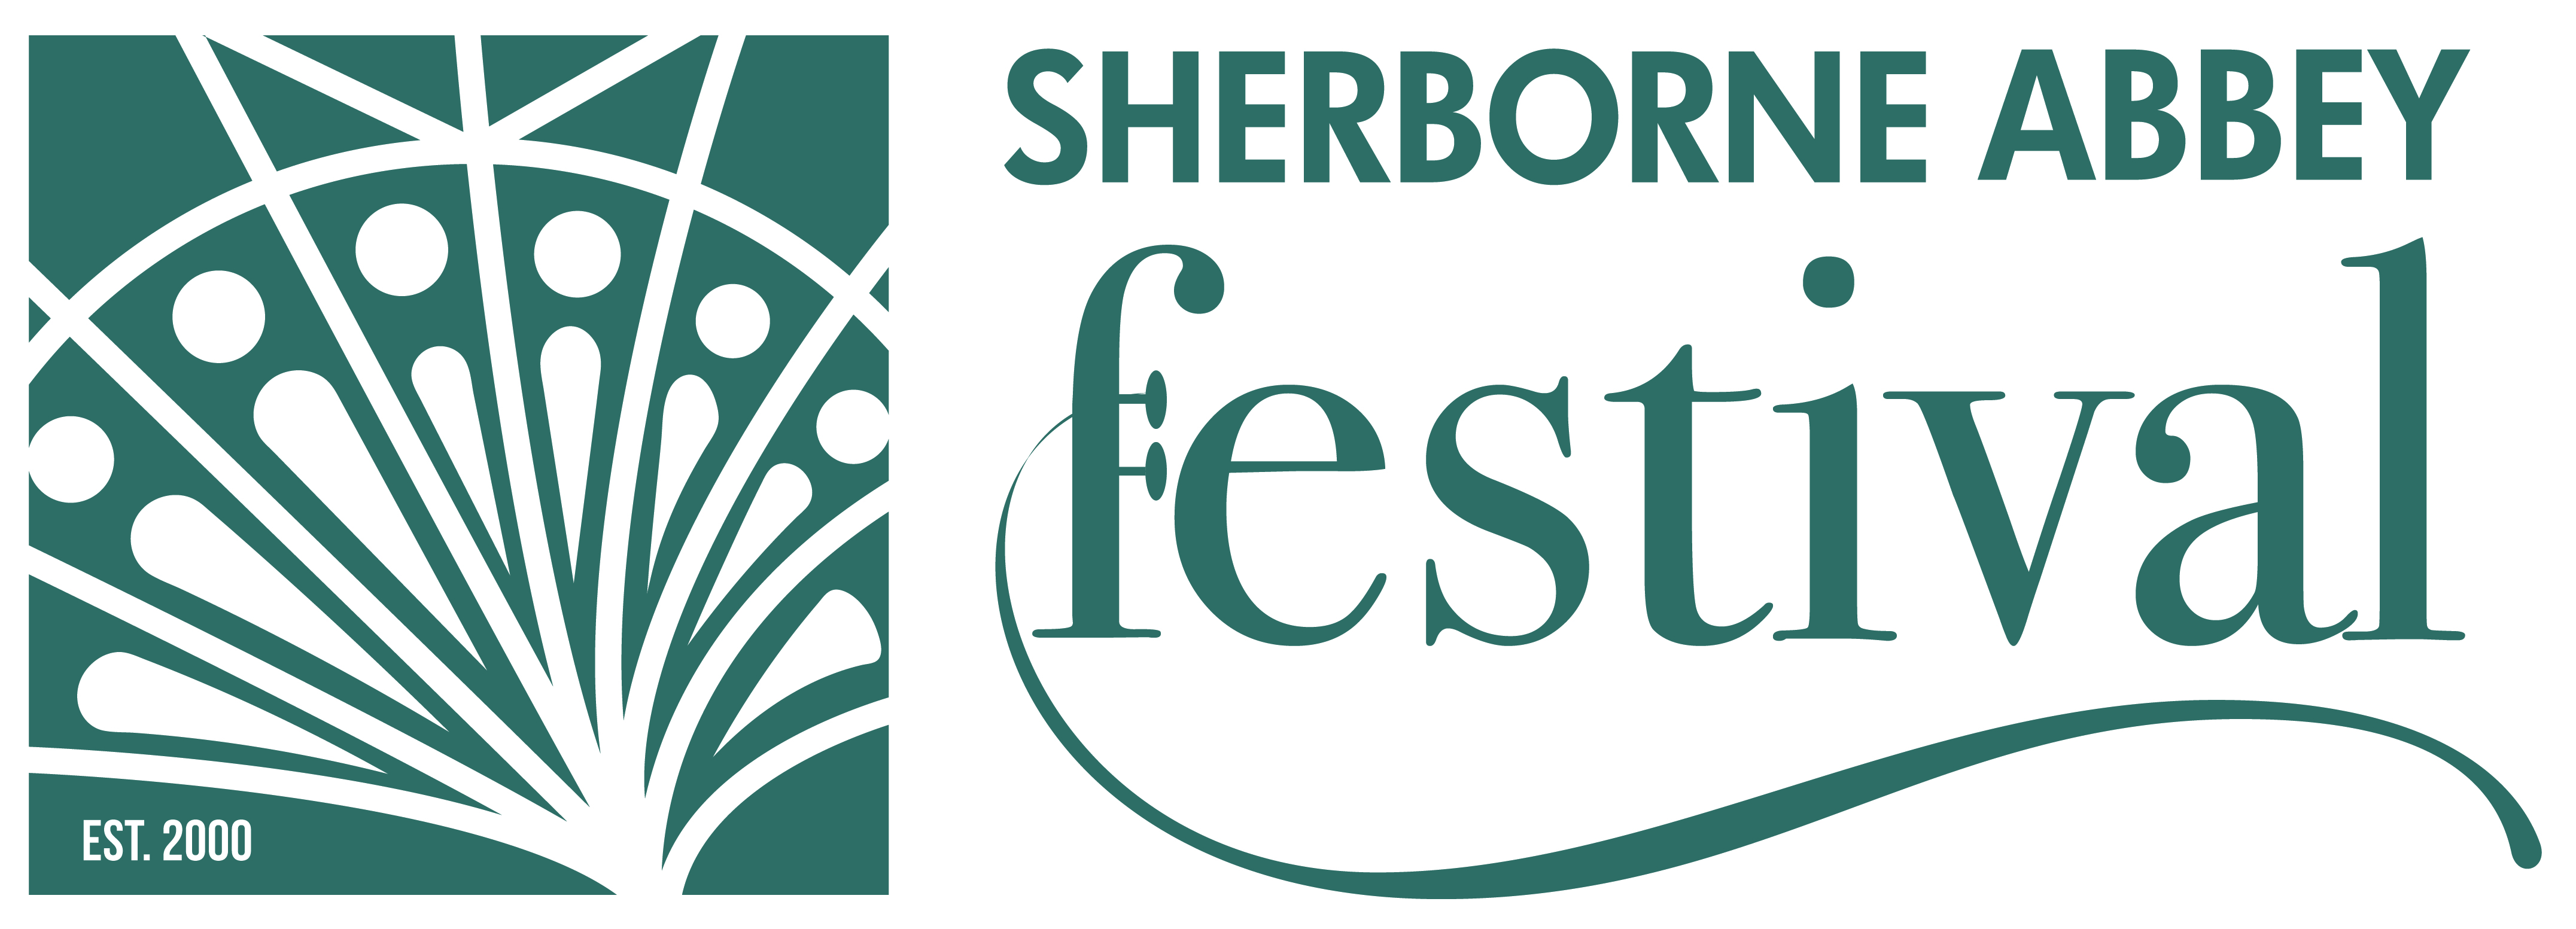 Sherborne Abbey Festival